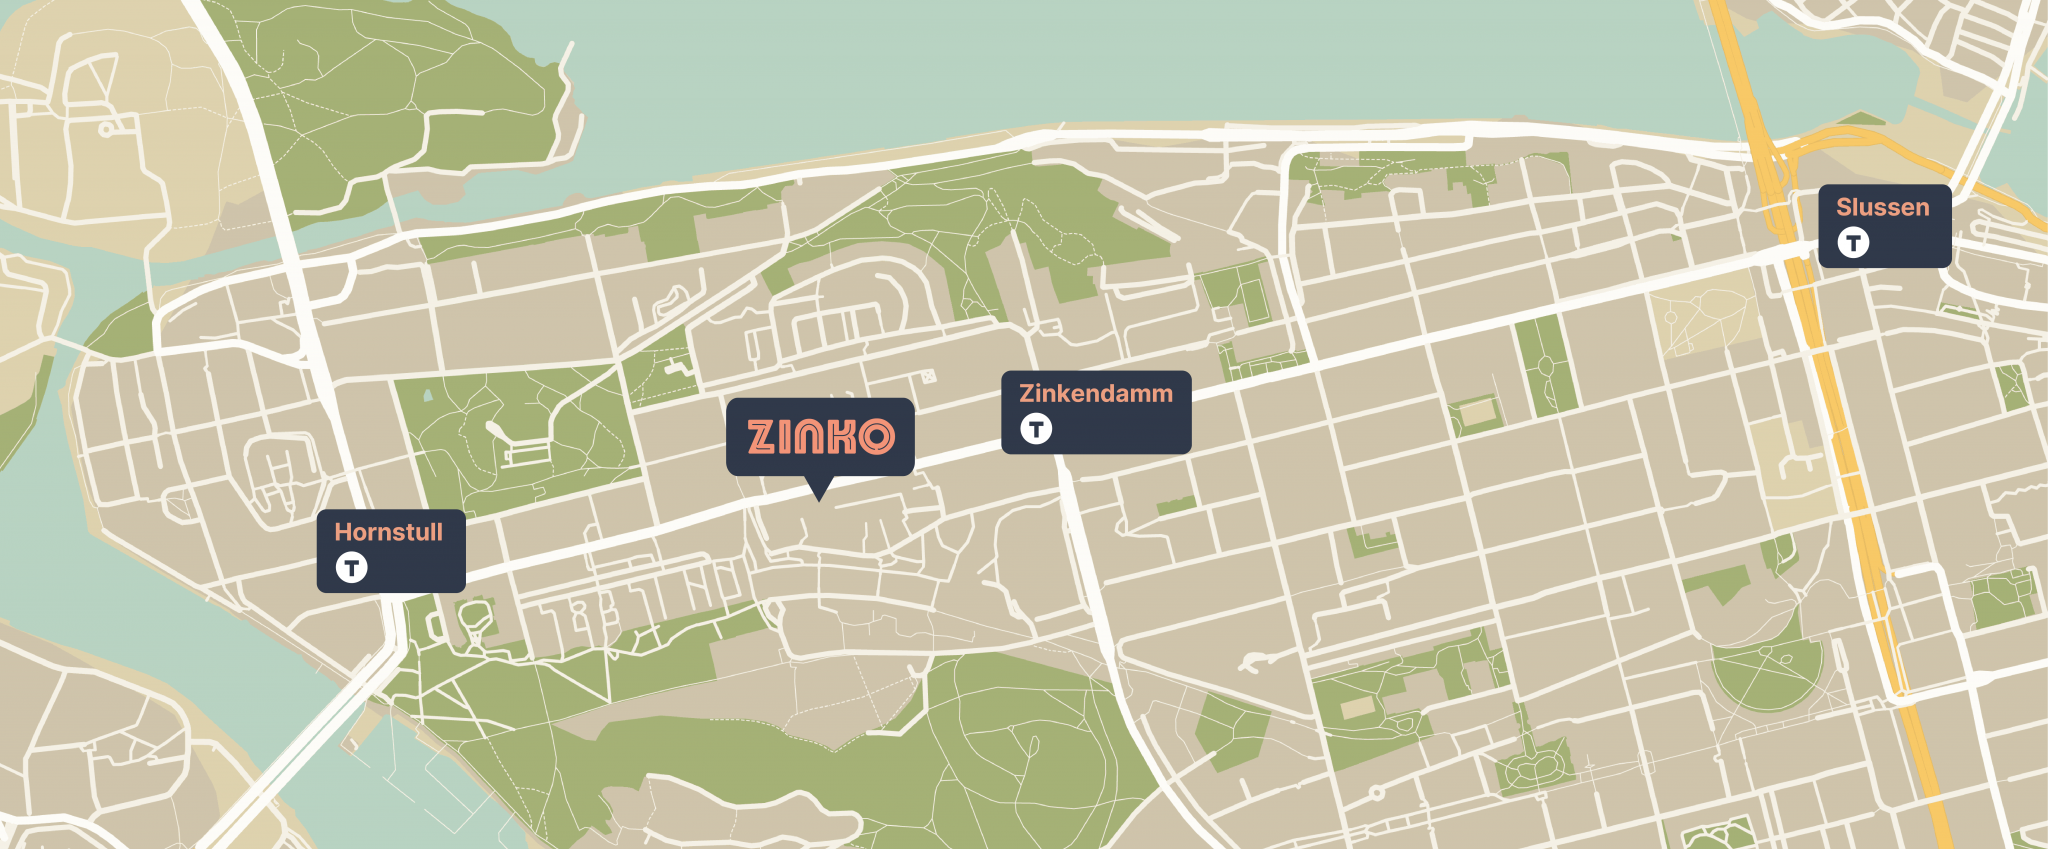 Zinko Metro Map